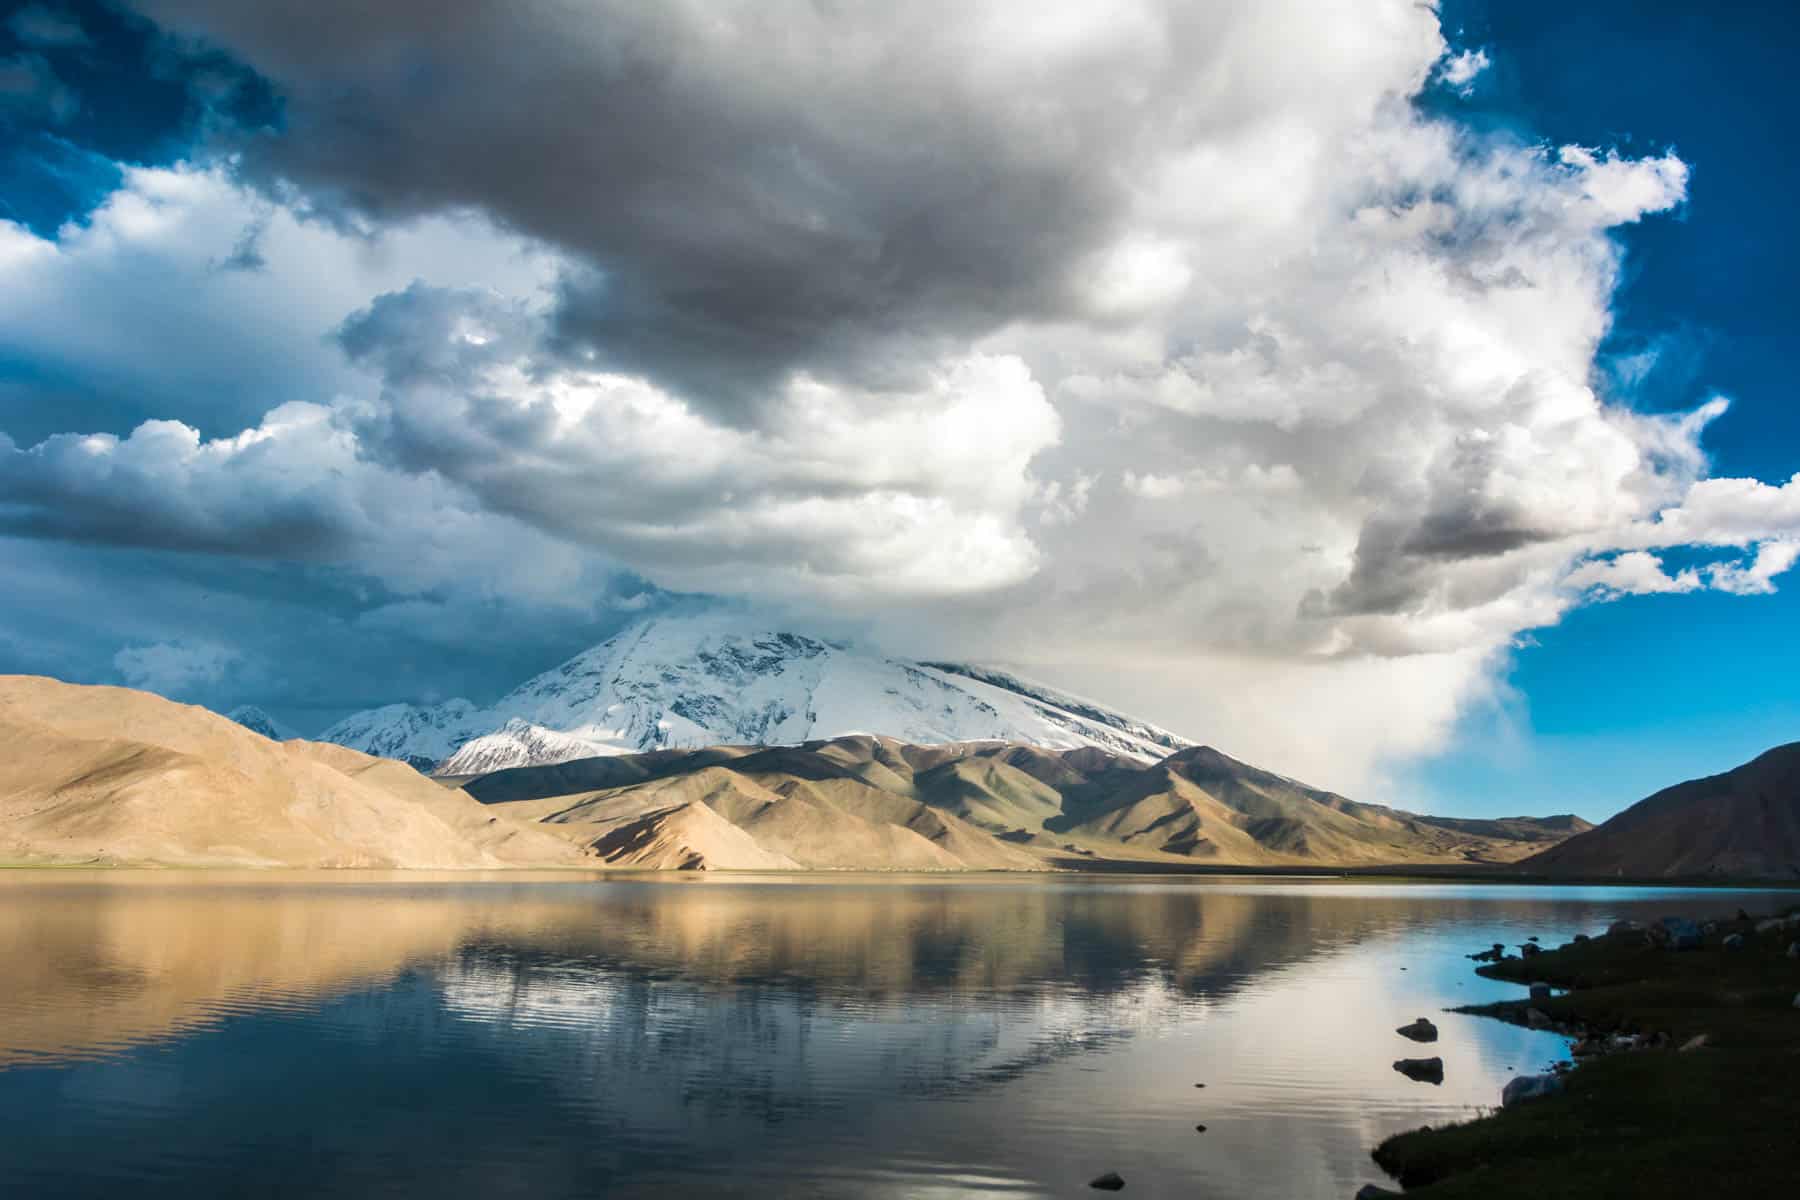 Clouds over Karakul Lake, Xinjiang, China